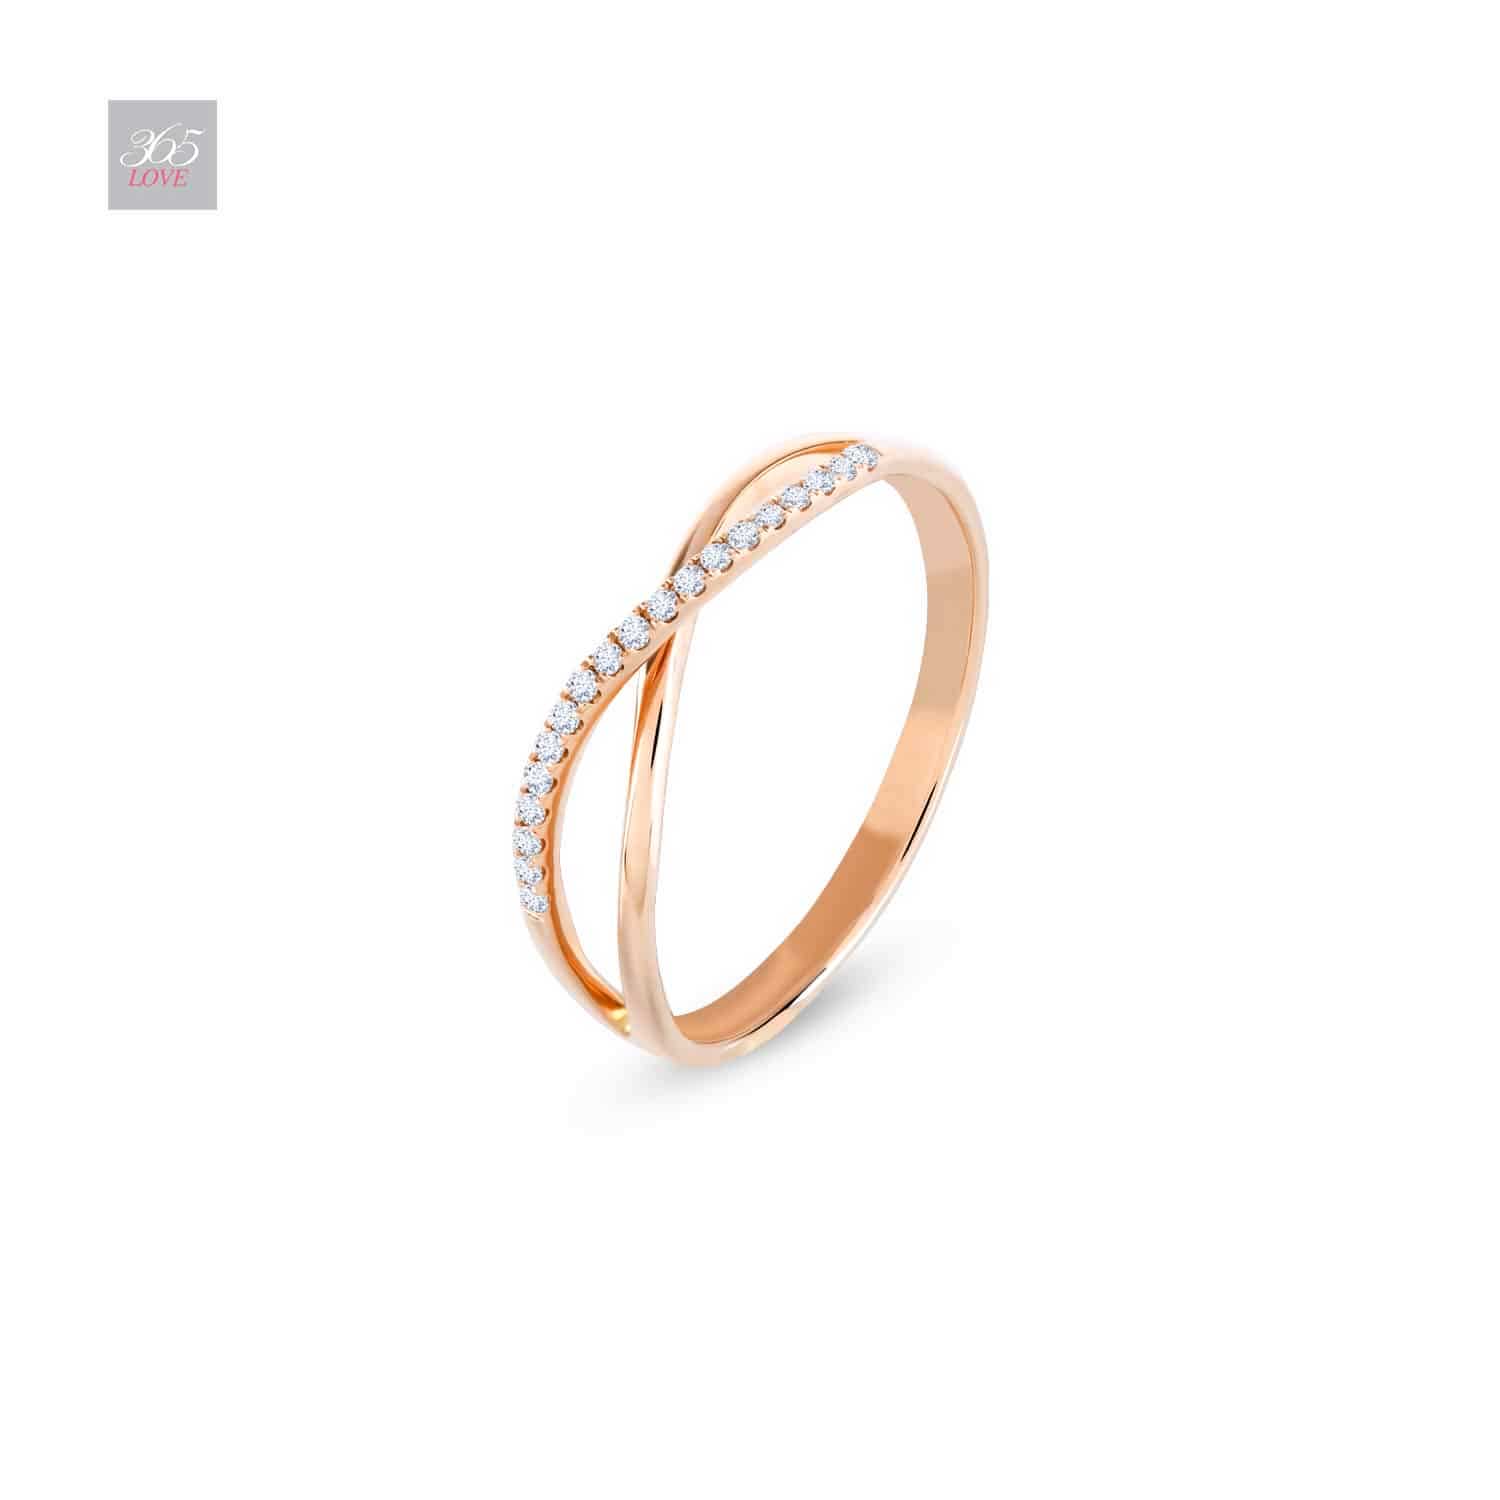 Buy Dual-Toned Rings for Women by Malabar Gold & Diamonds Online | Ajio.com